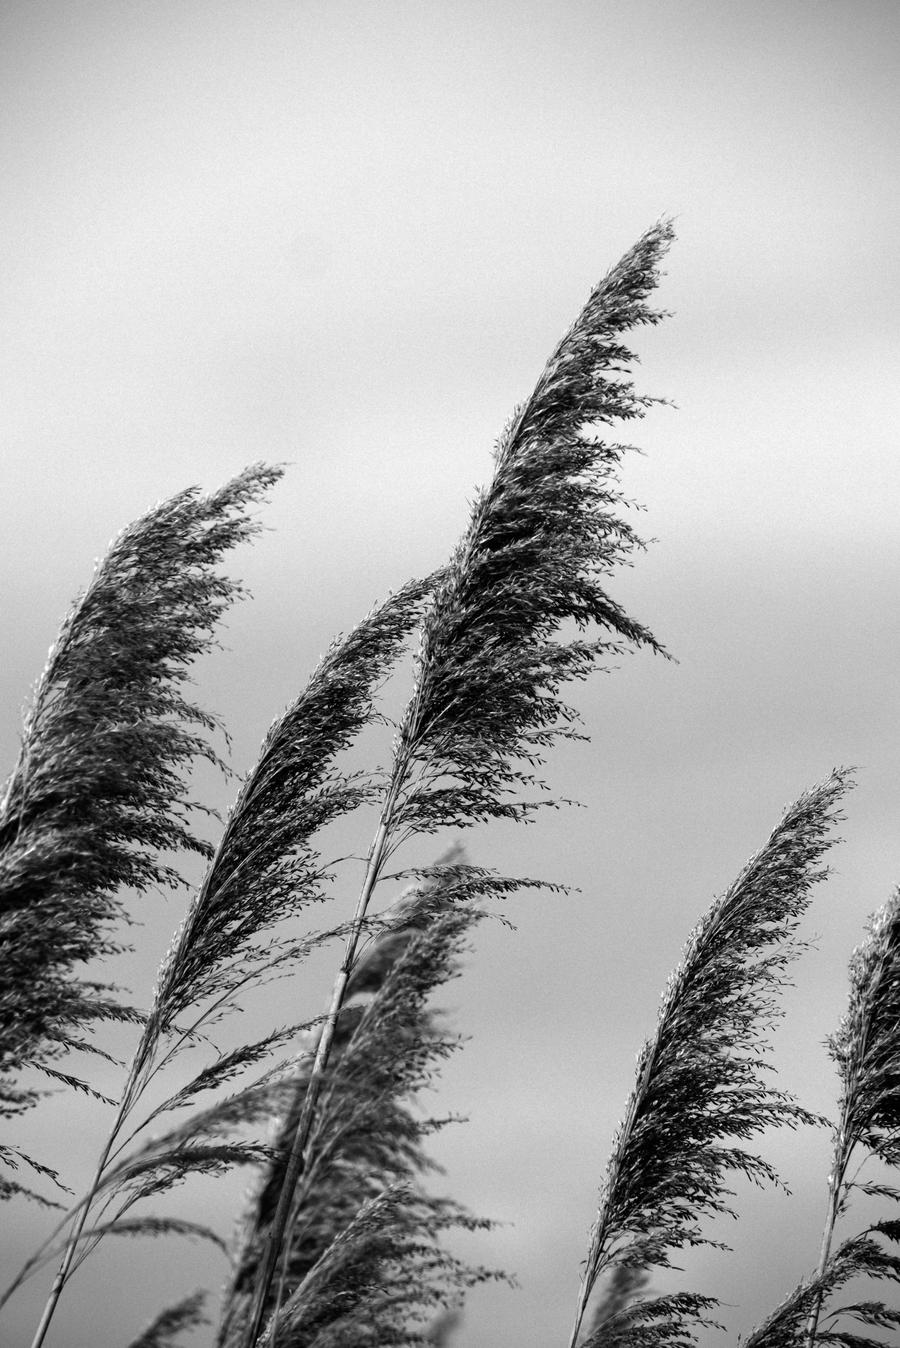 Contrasty Reeds